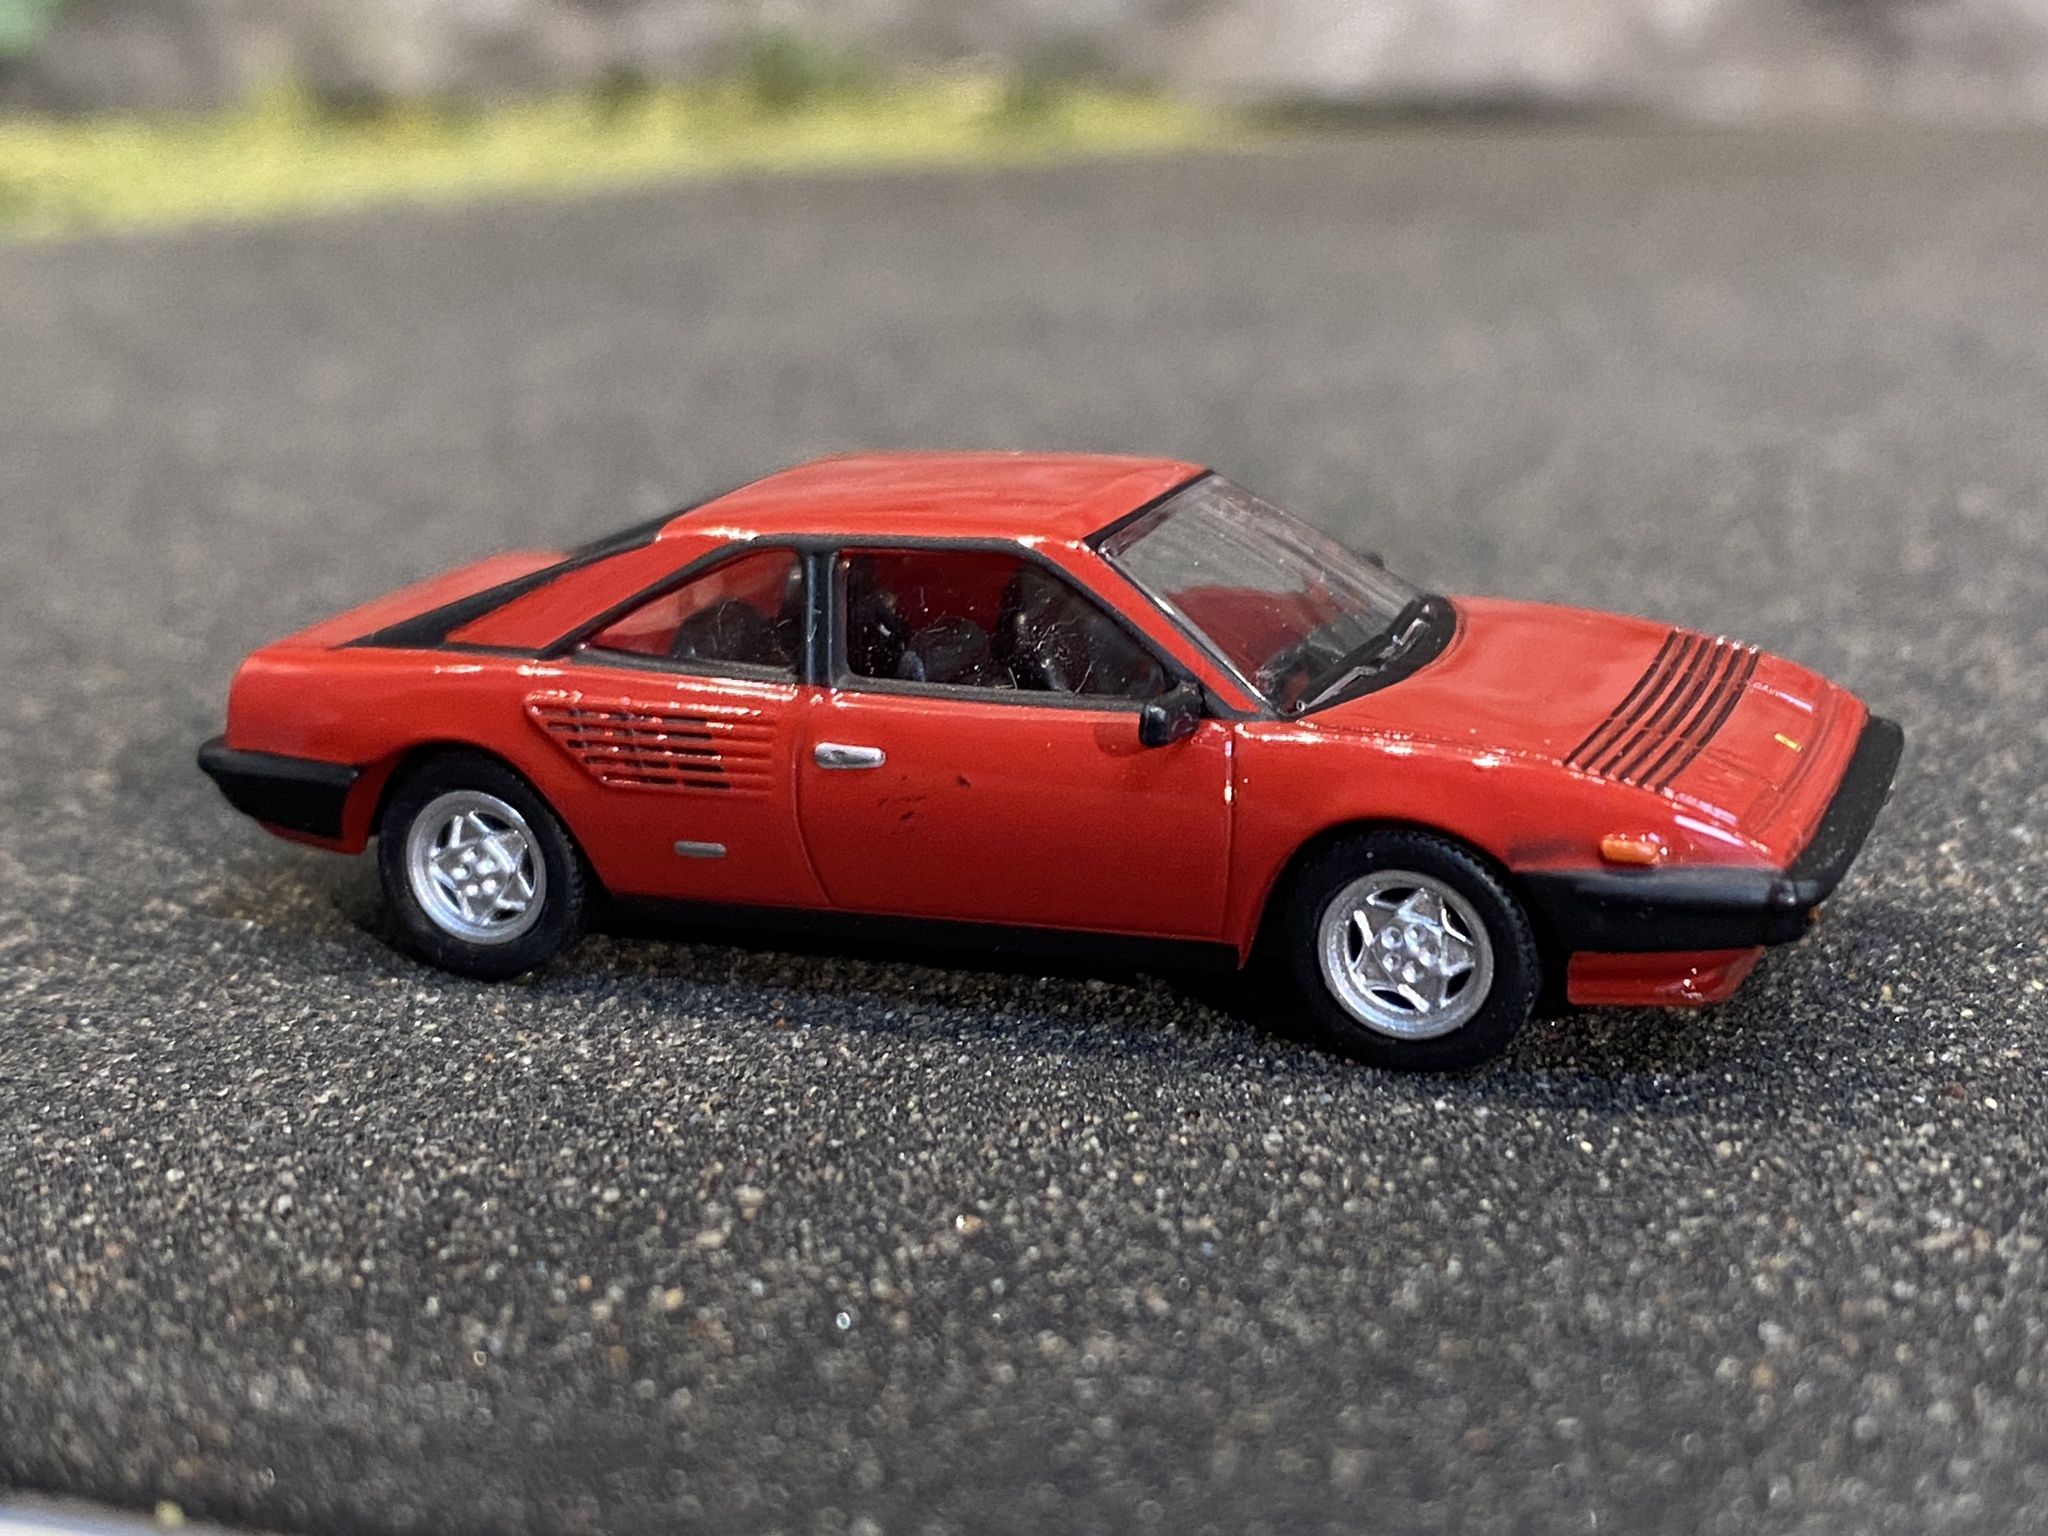 Skala 1/87 - Ferrari Mondial, Röd från PCX87